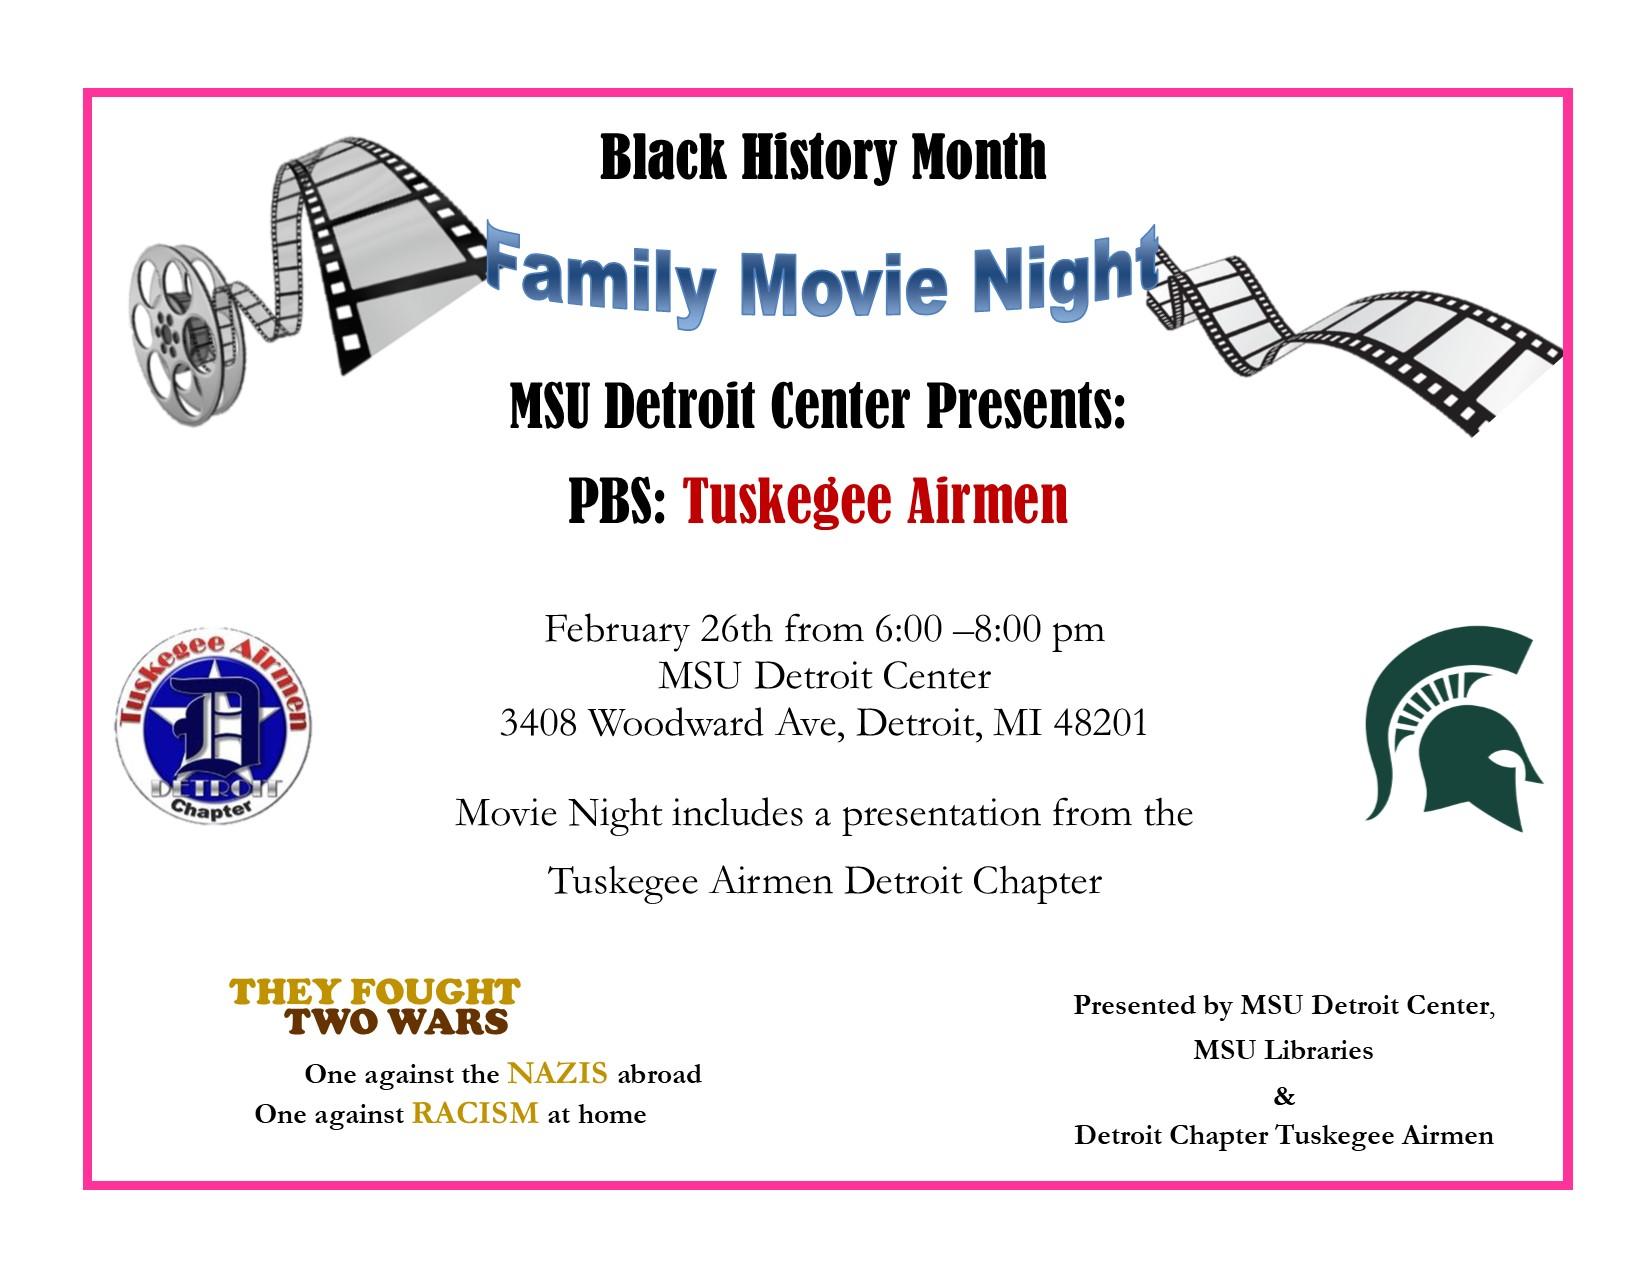 Black History Month: Family Movie Night at MSU Detroit Center